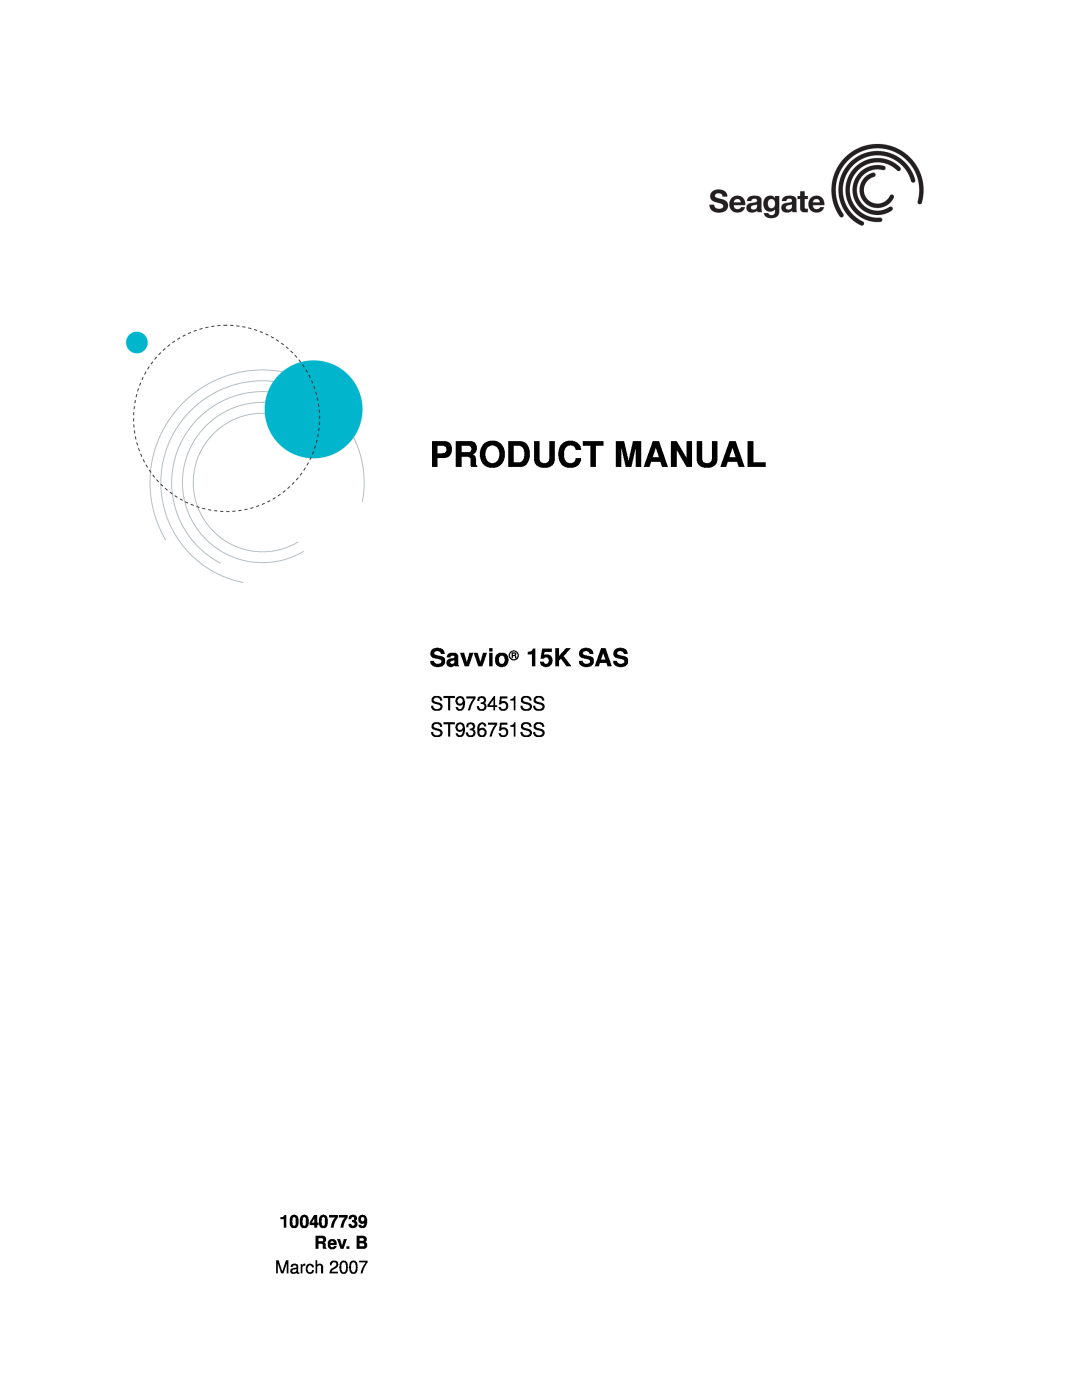 Seagate manual Savvio 15K SAS, Product Manual, ST973451SS ST936751SS, 100407739 Rev. B 